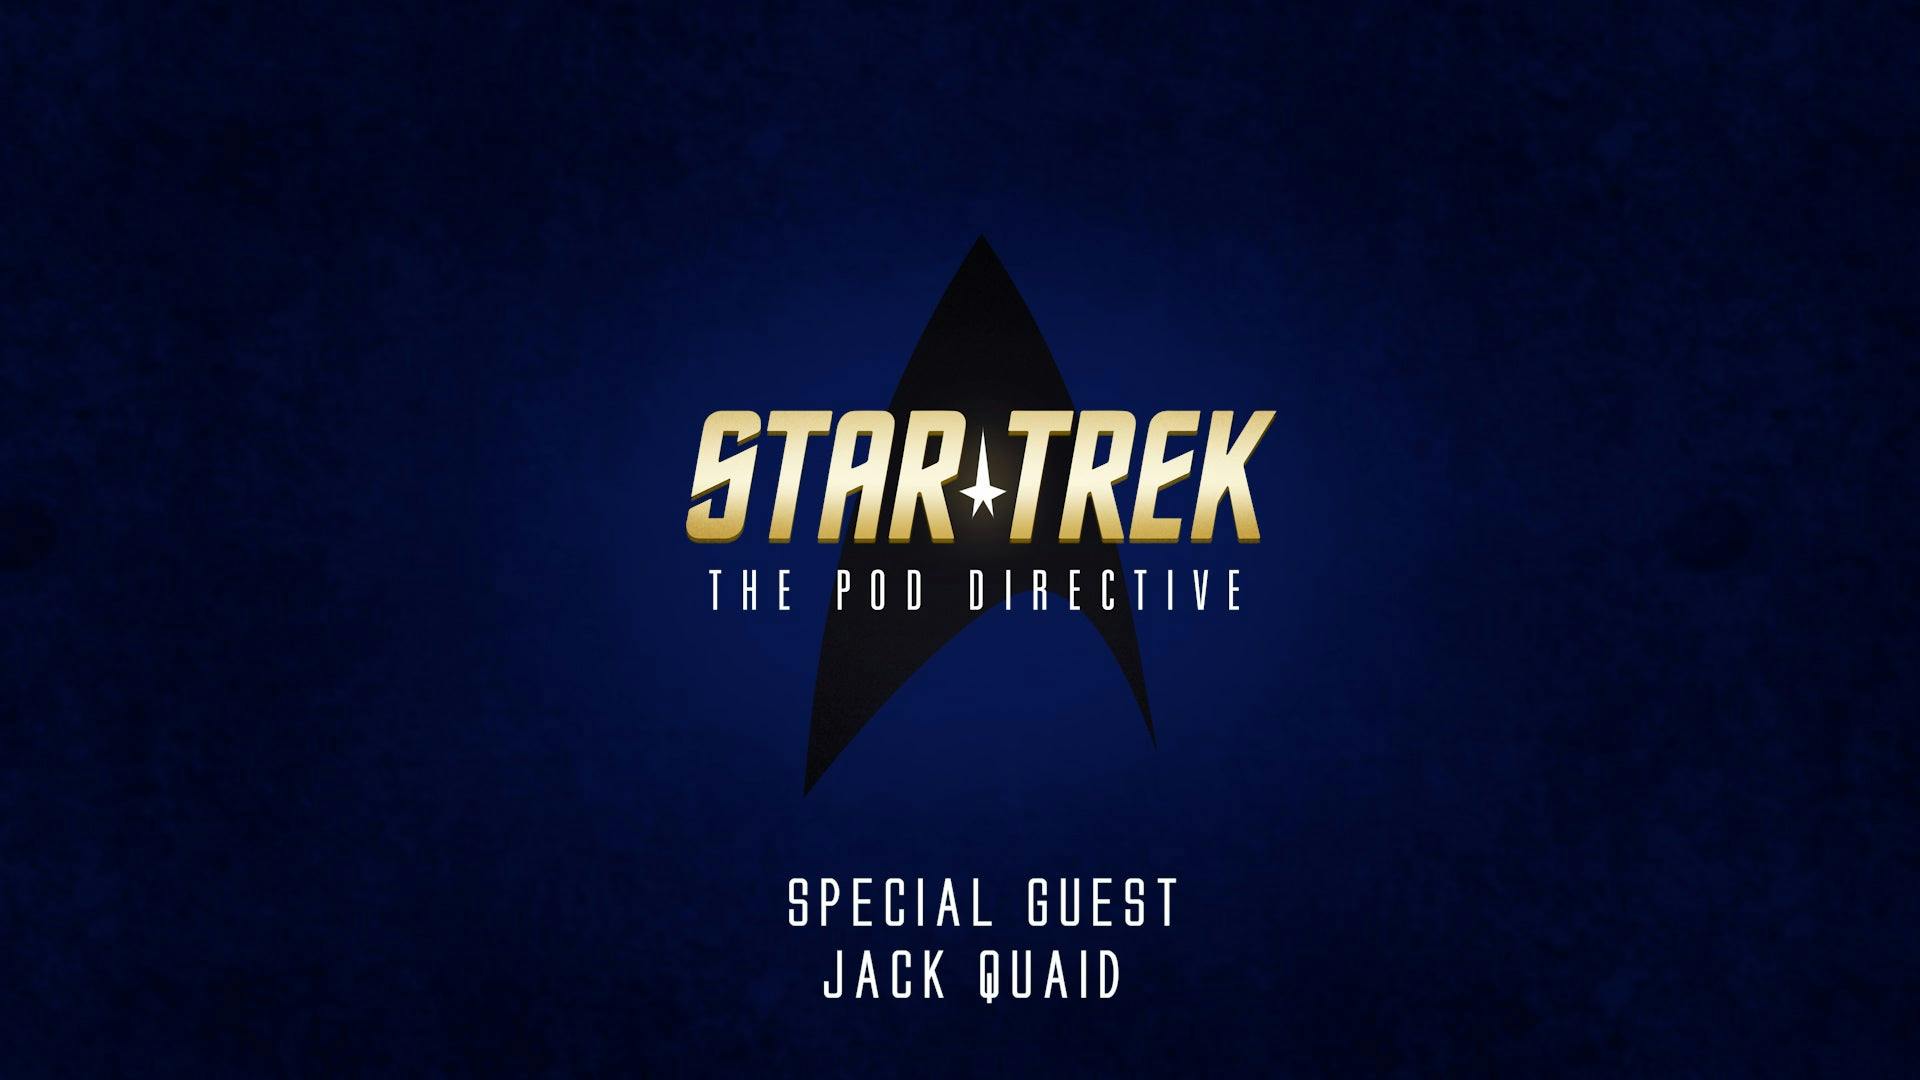 Star Trek: The Pod Directive with Jack Quaid